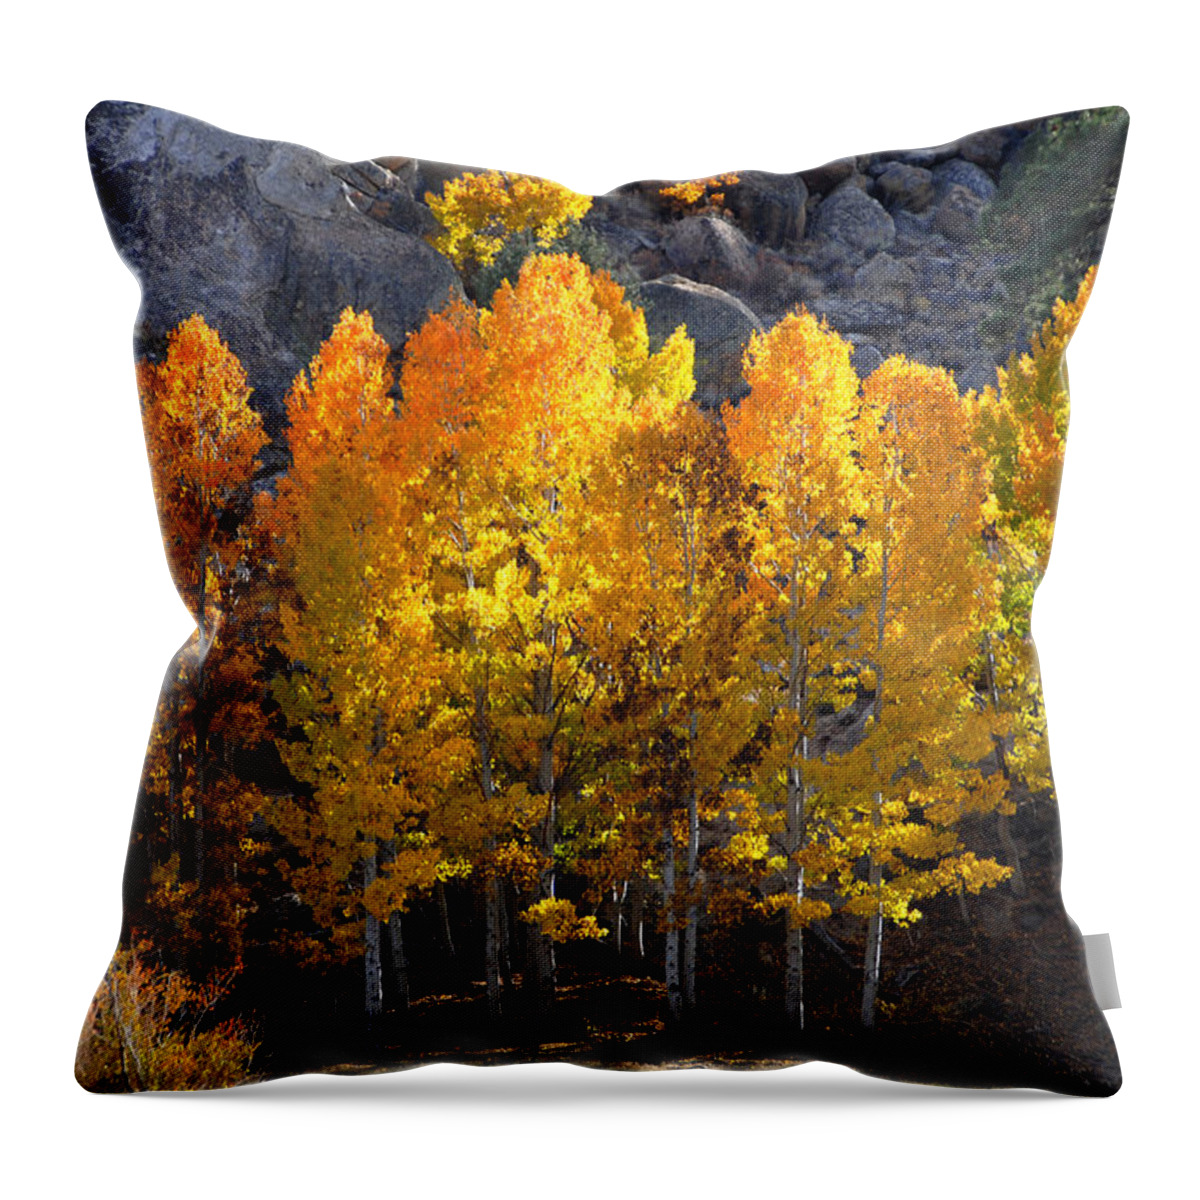 Fall Throw Pillow featuring the photograph Aspen Gold by Lynn Bauer